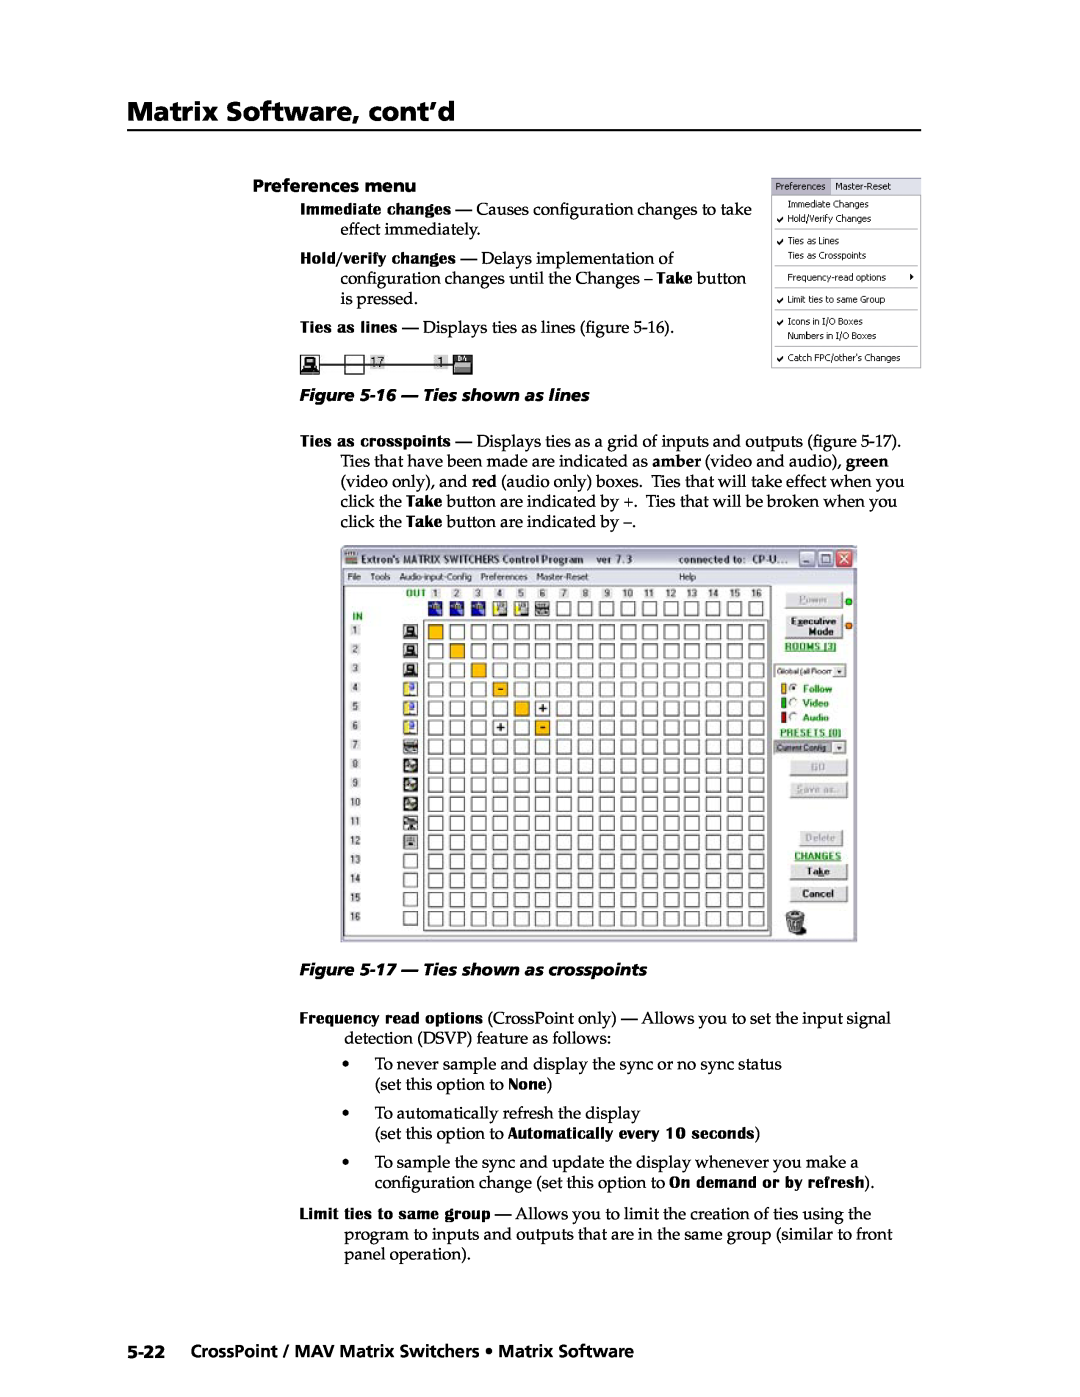 Extron electronic MAV Plus Series, Ultra Series manual Matrix Software, cont’d, Preferences menu, 16 - Ties shown as lines 